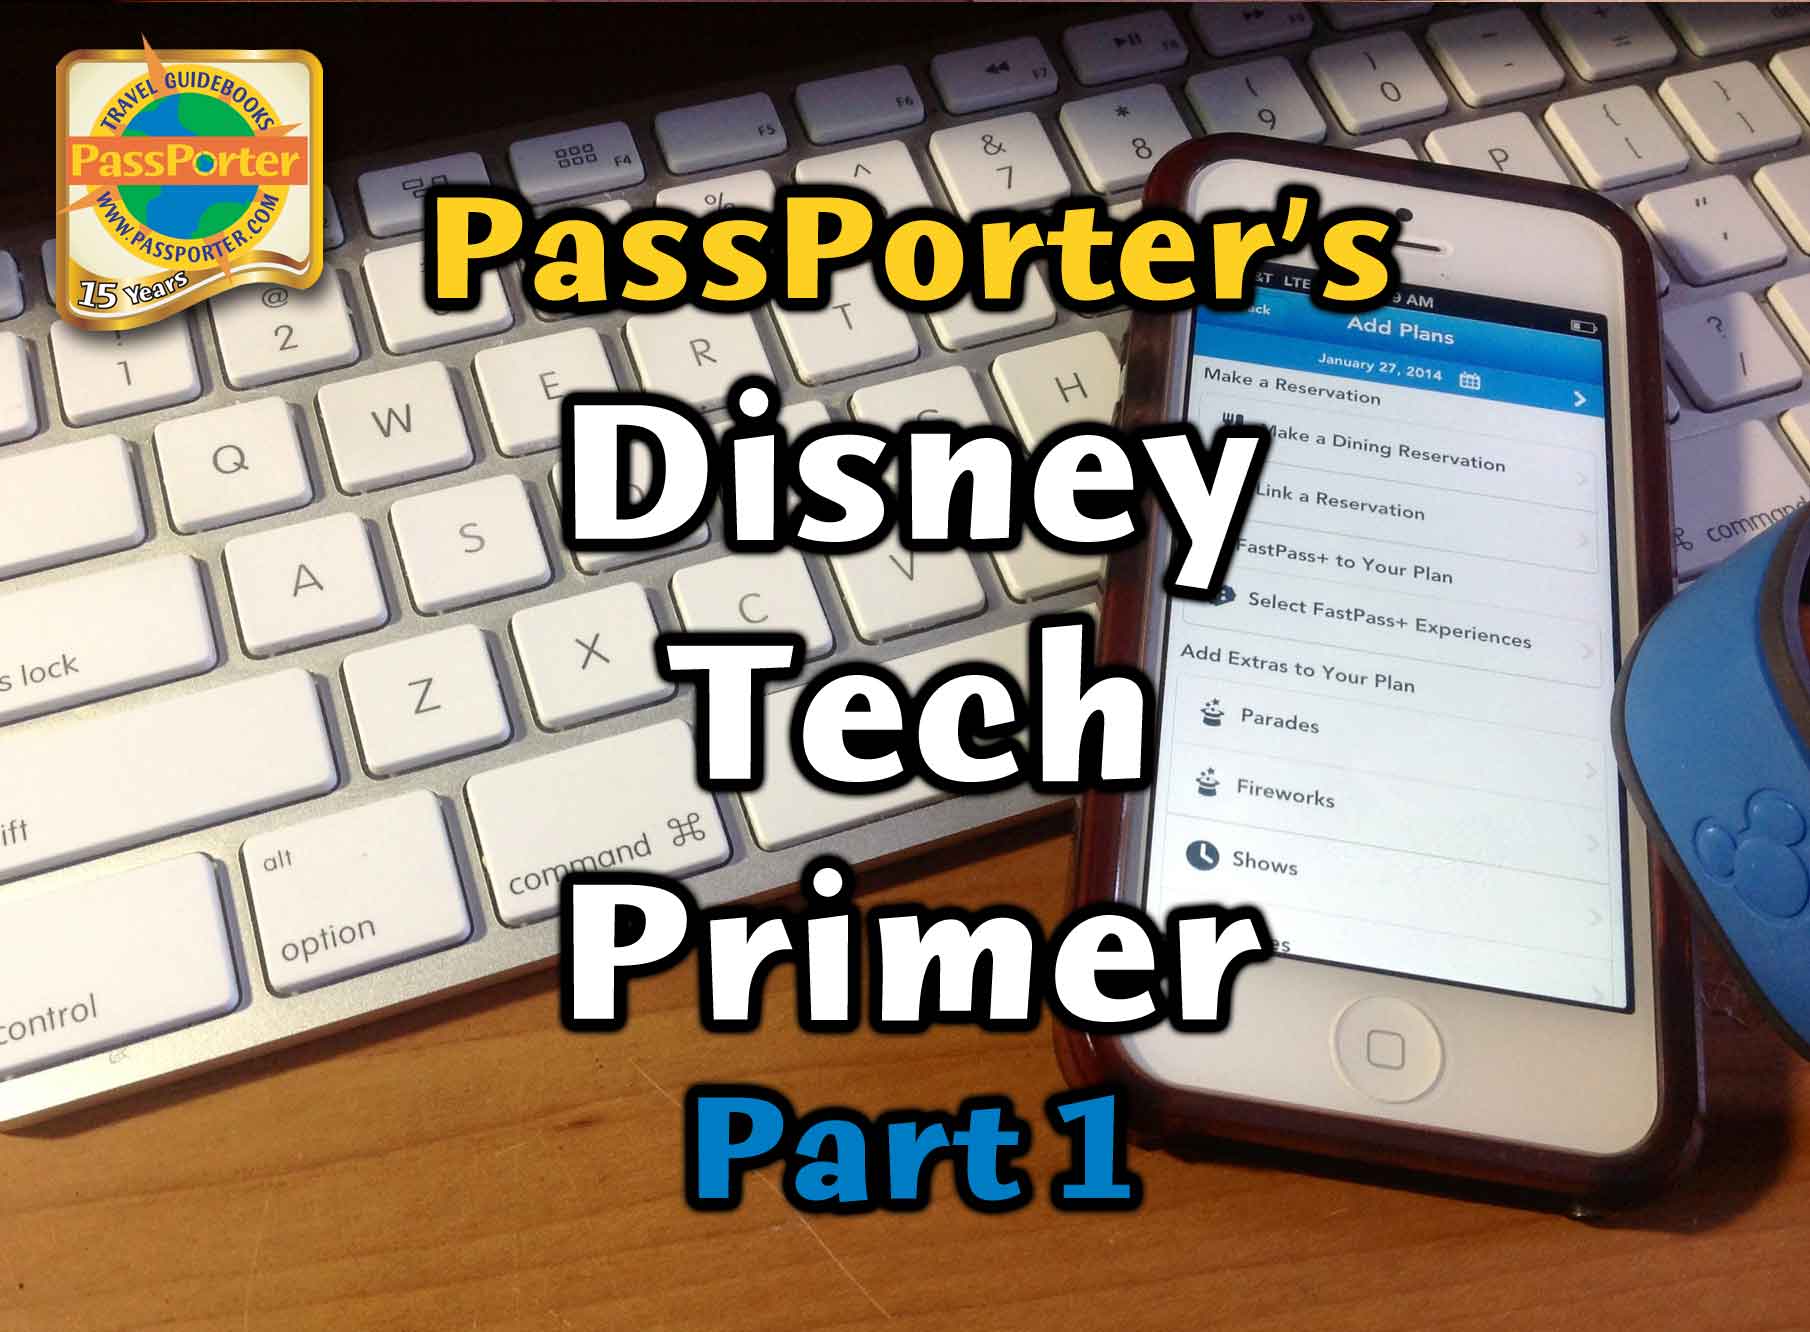 PassPorter Disney Tech Primer Part 1 photo